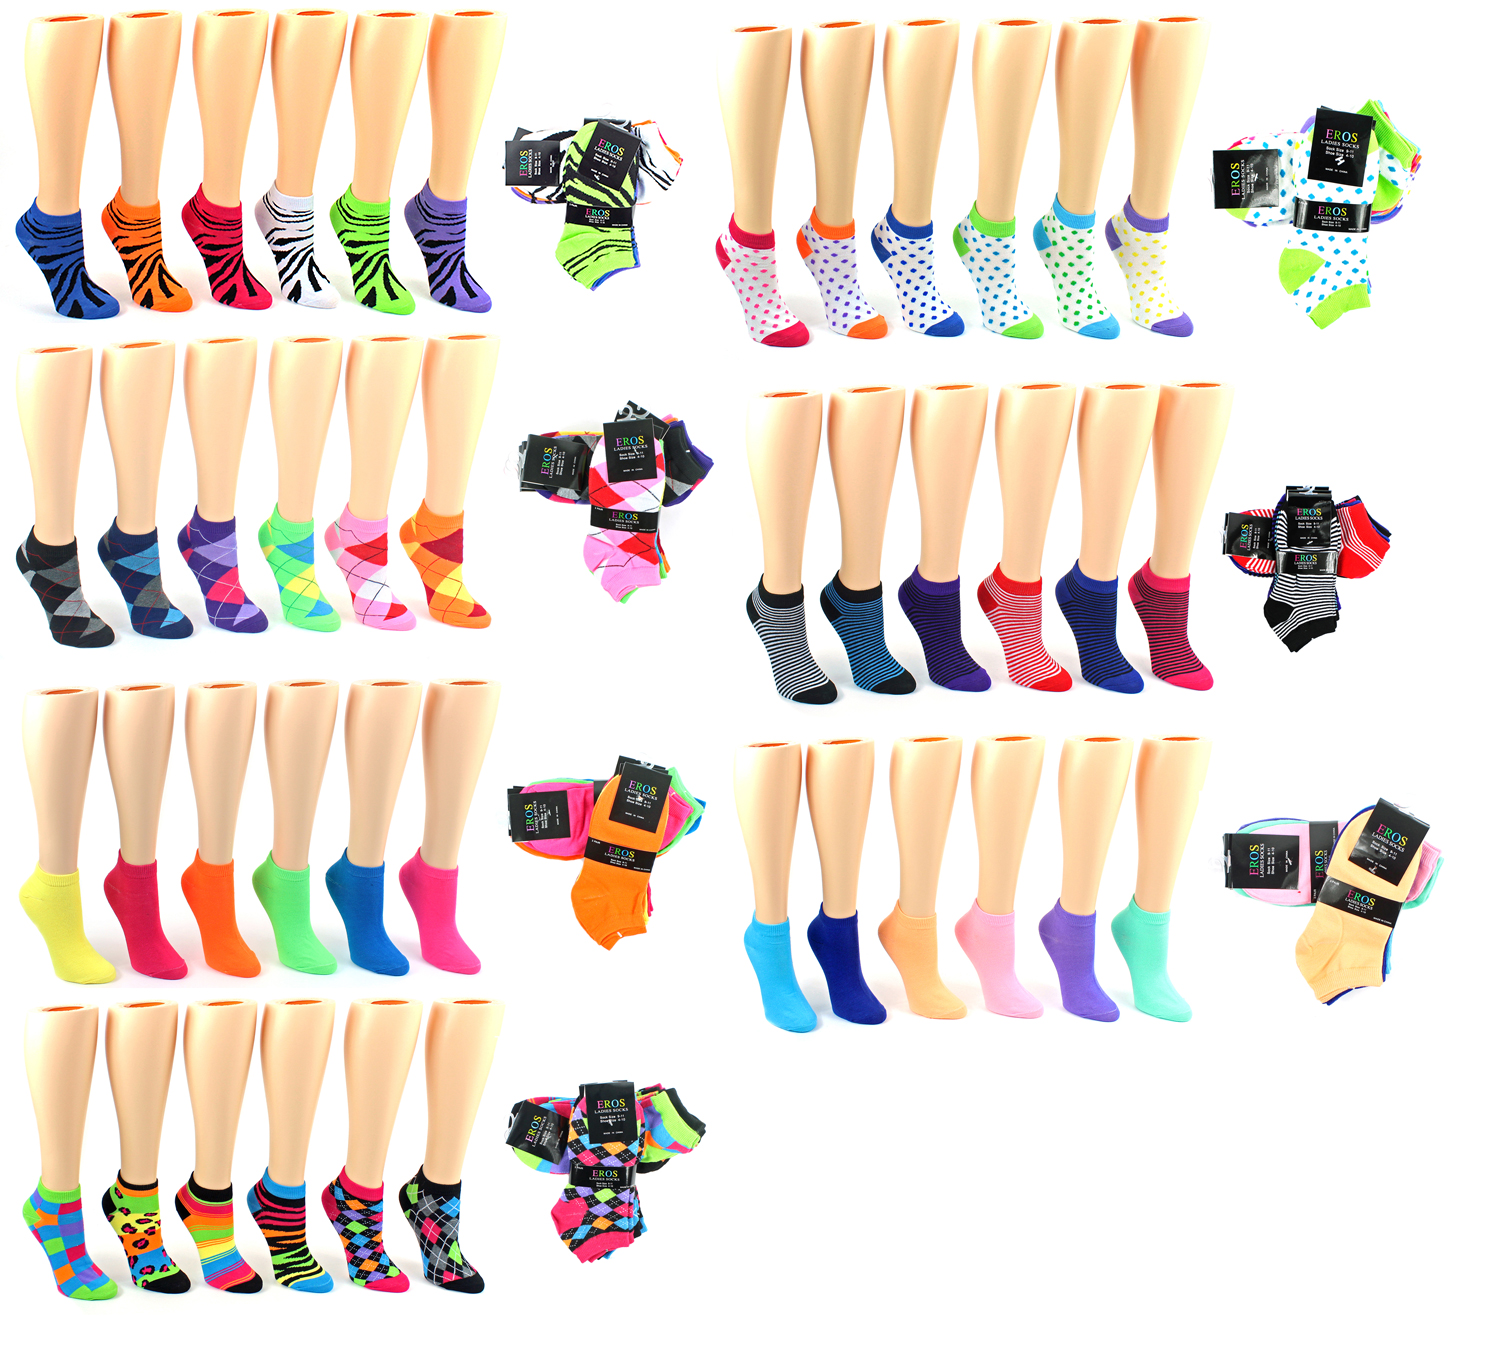 Wholesale Socks | Buy Socks in Bulk | Eros Wholesale | eroswholesale.com